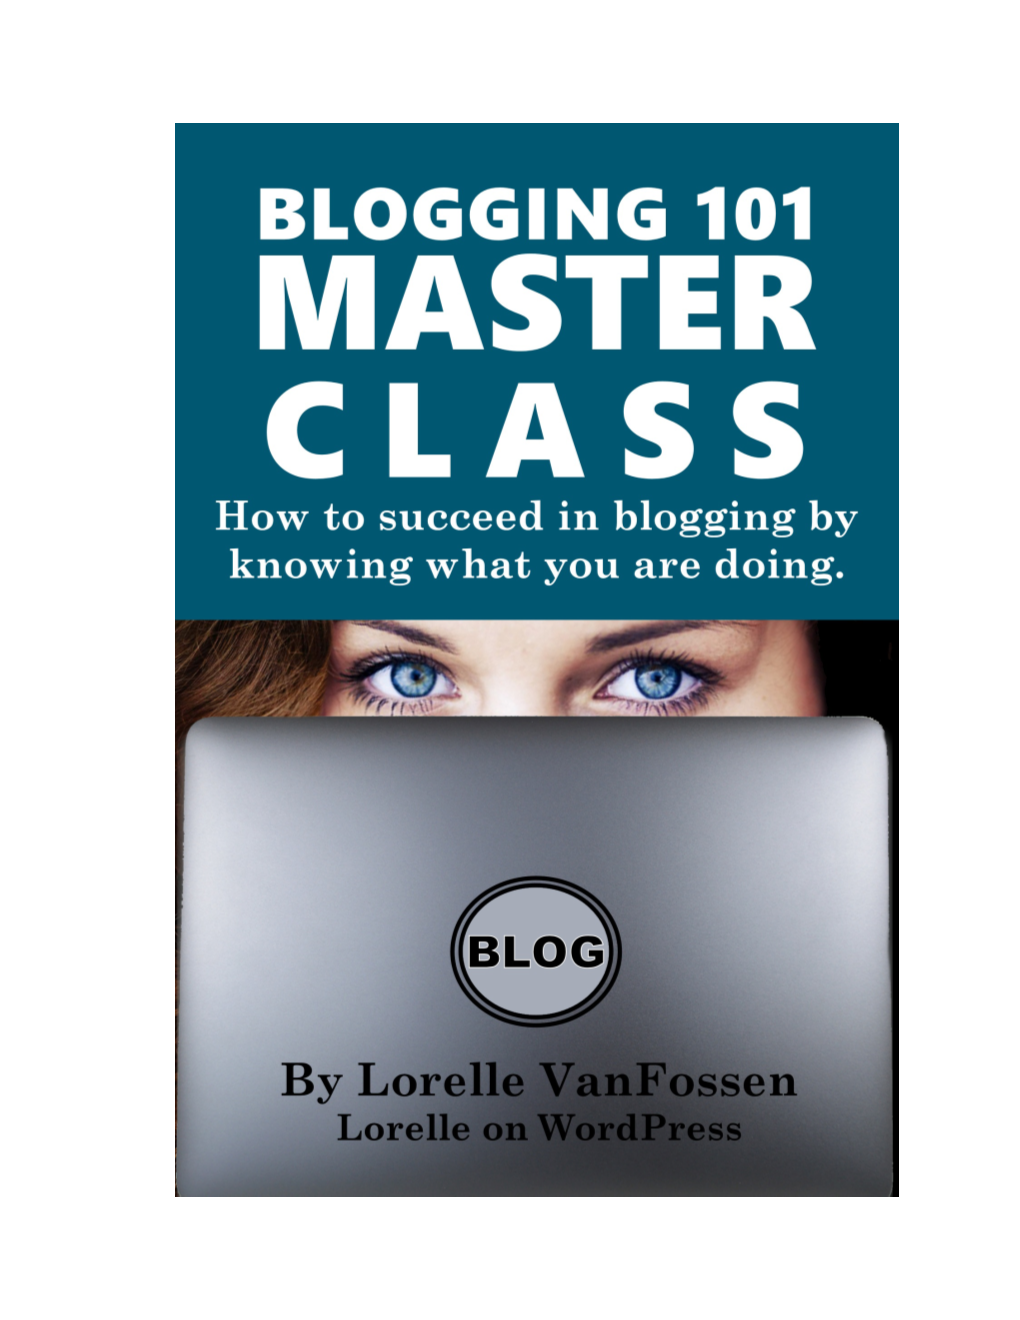 Blogging 101 Master Class."